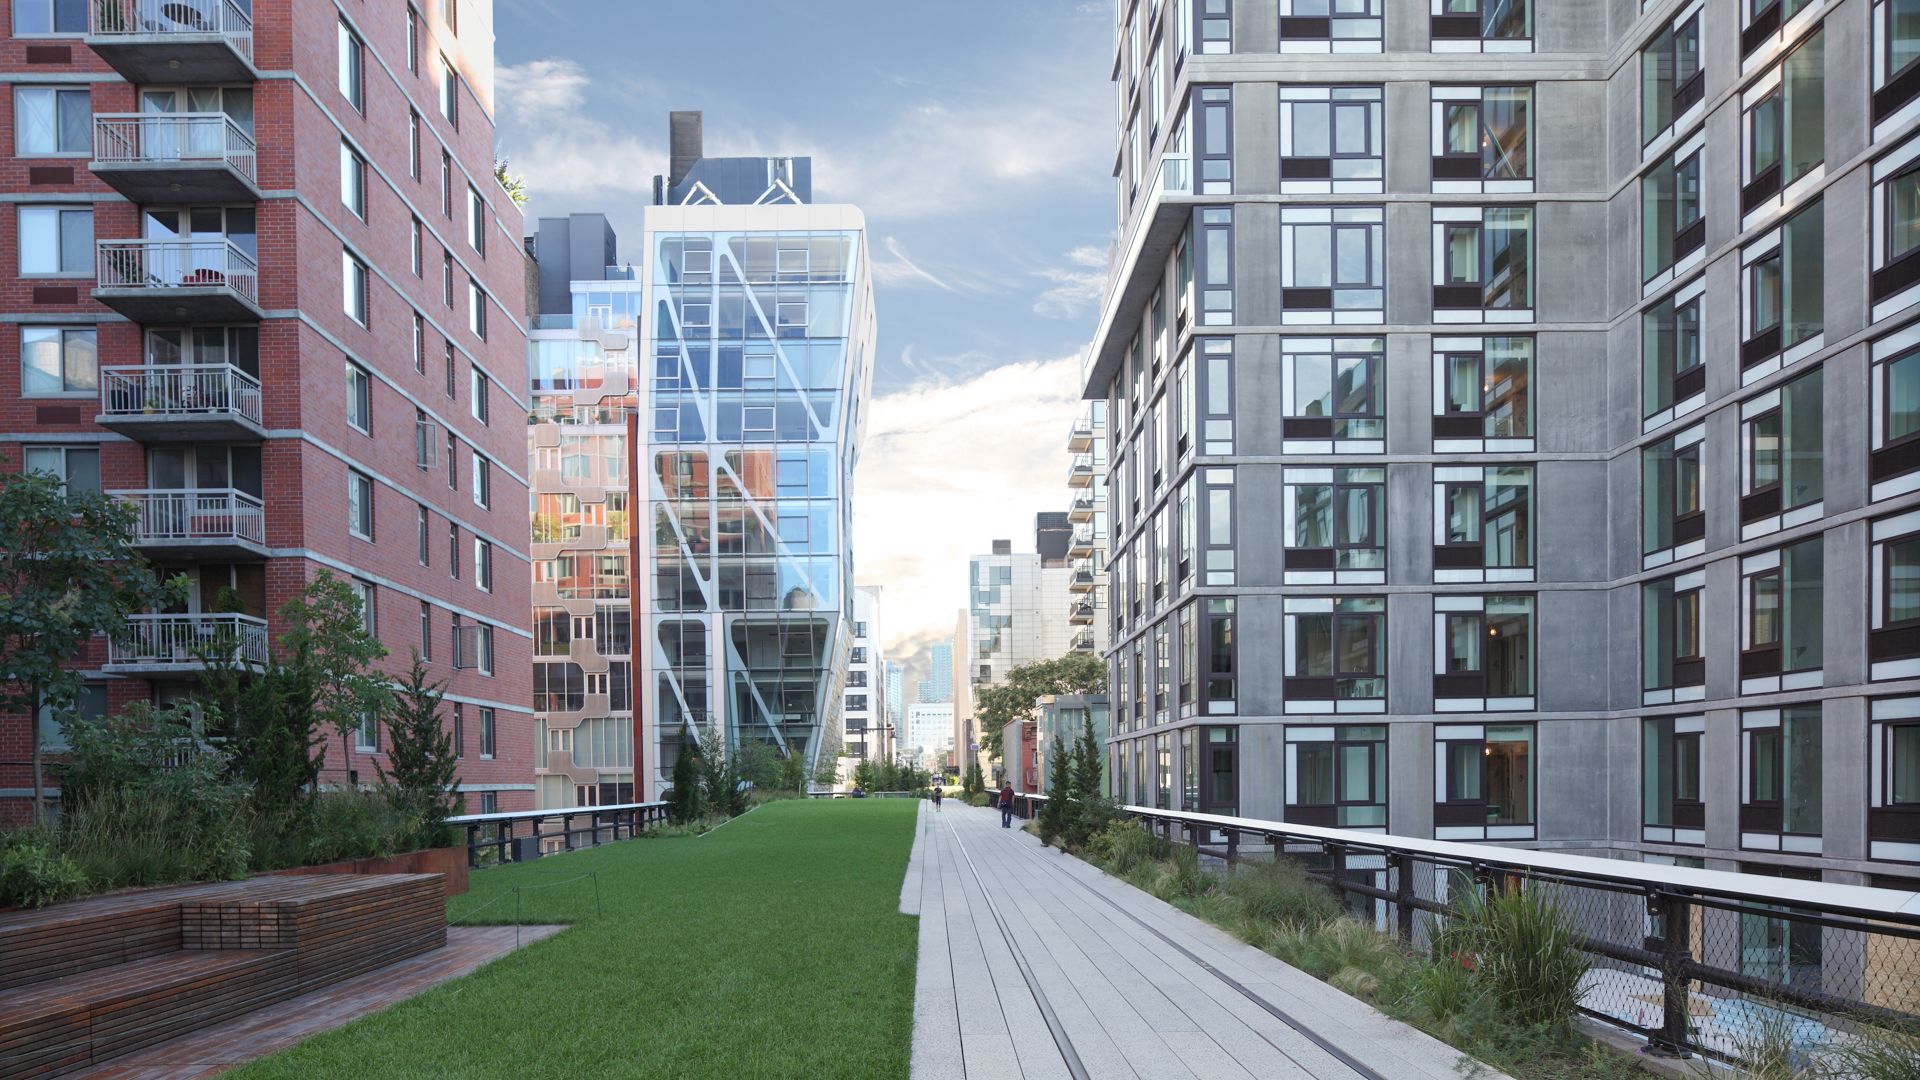 Simple Apartments Near The Highline New York with Simple Decor